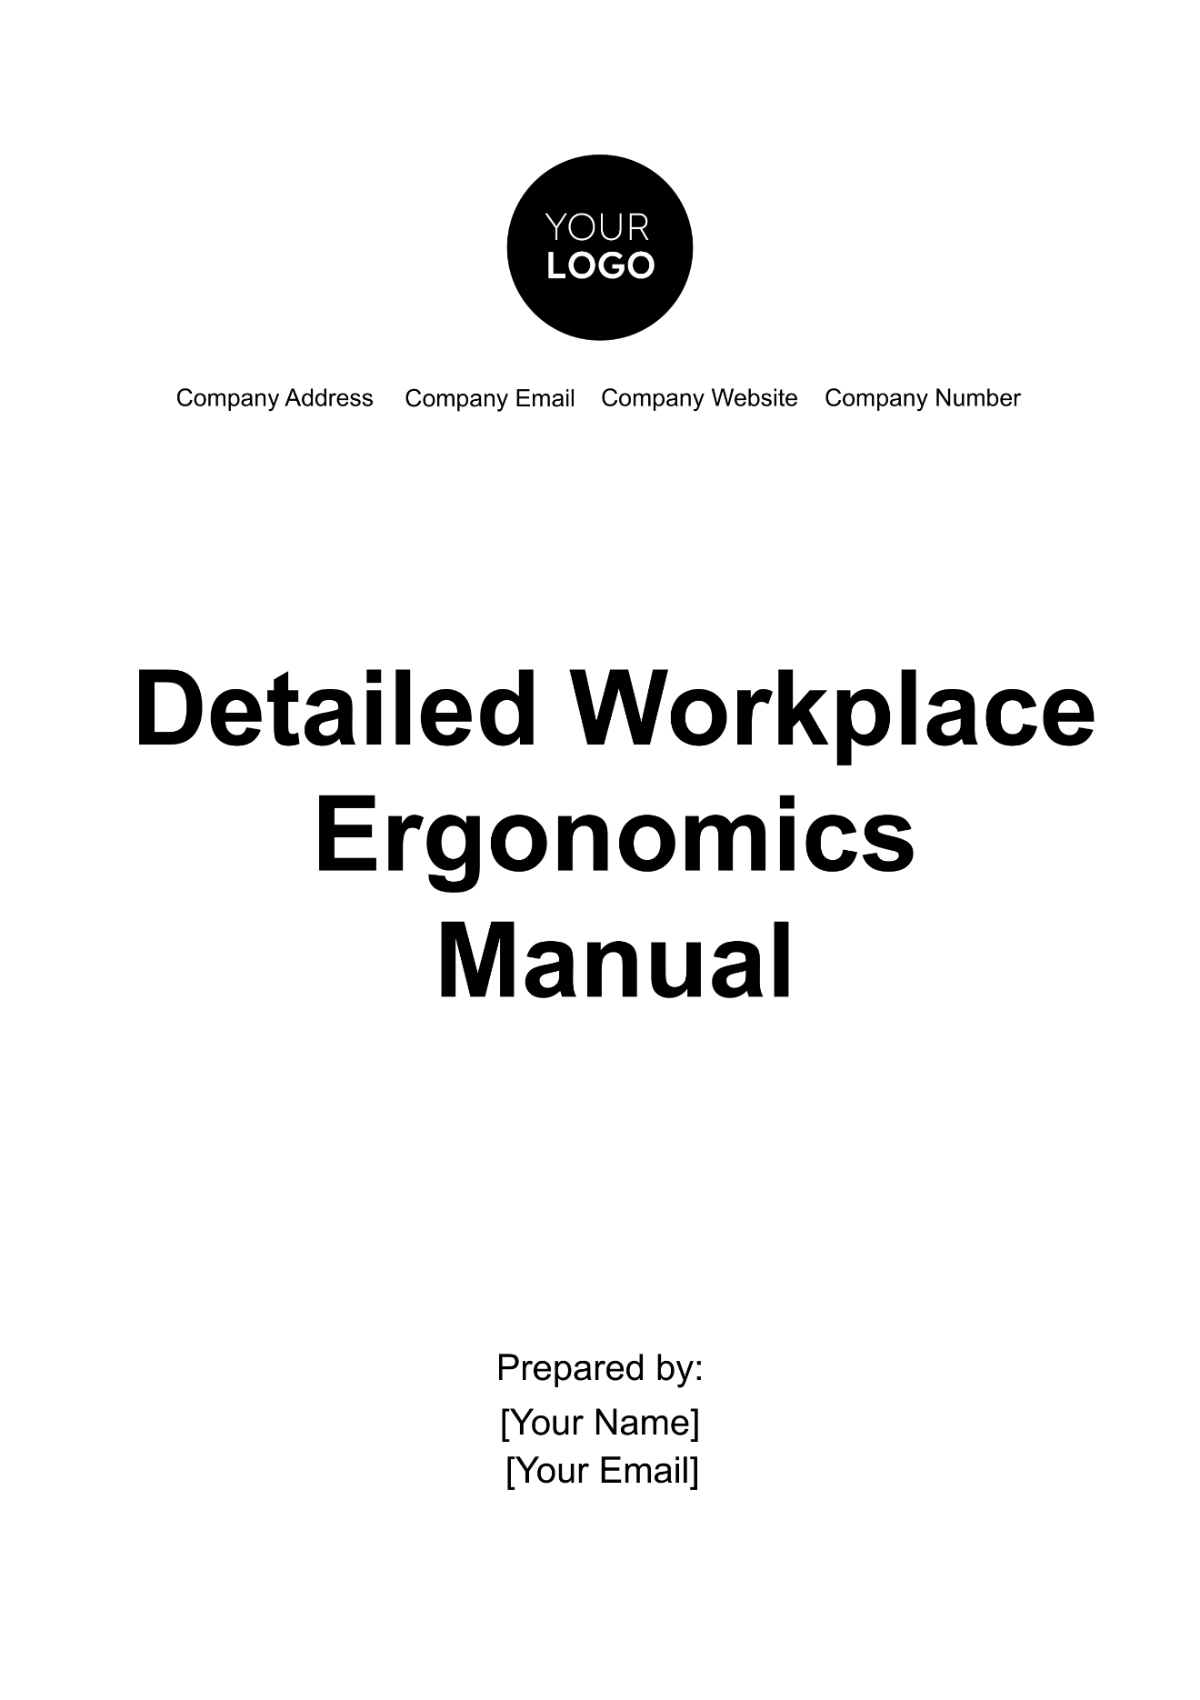 Free Detailed Workplace Ergonomics Manual Template